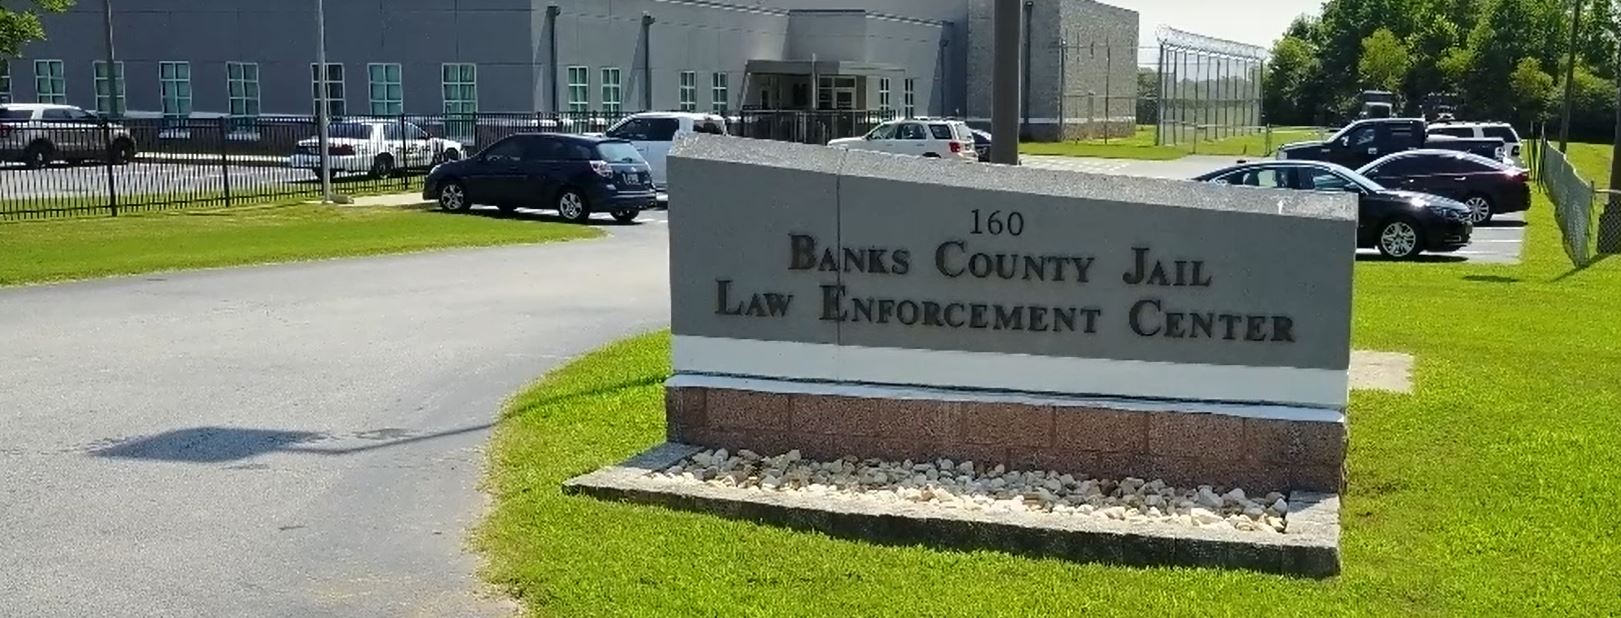 Photos Banks County Jail 2